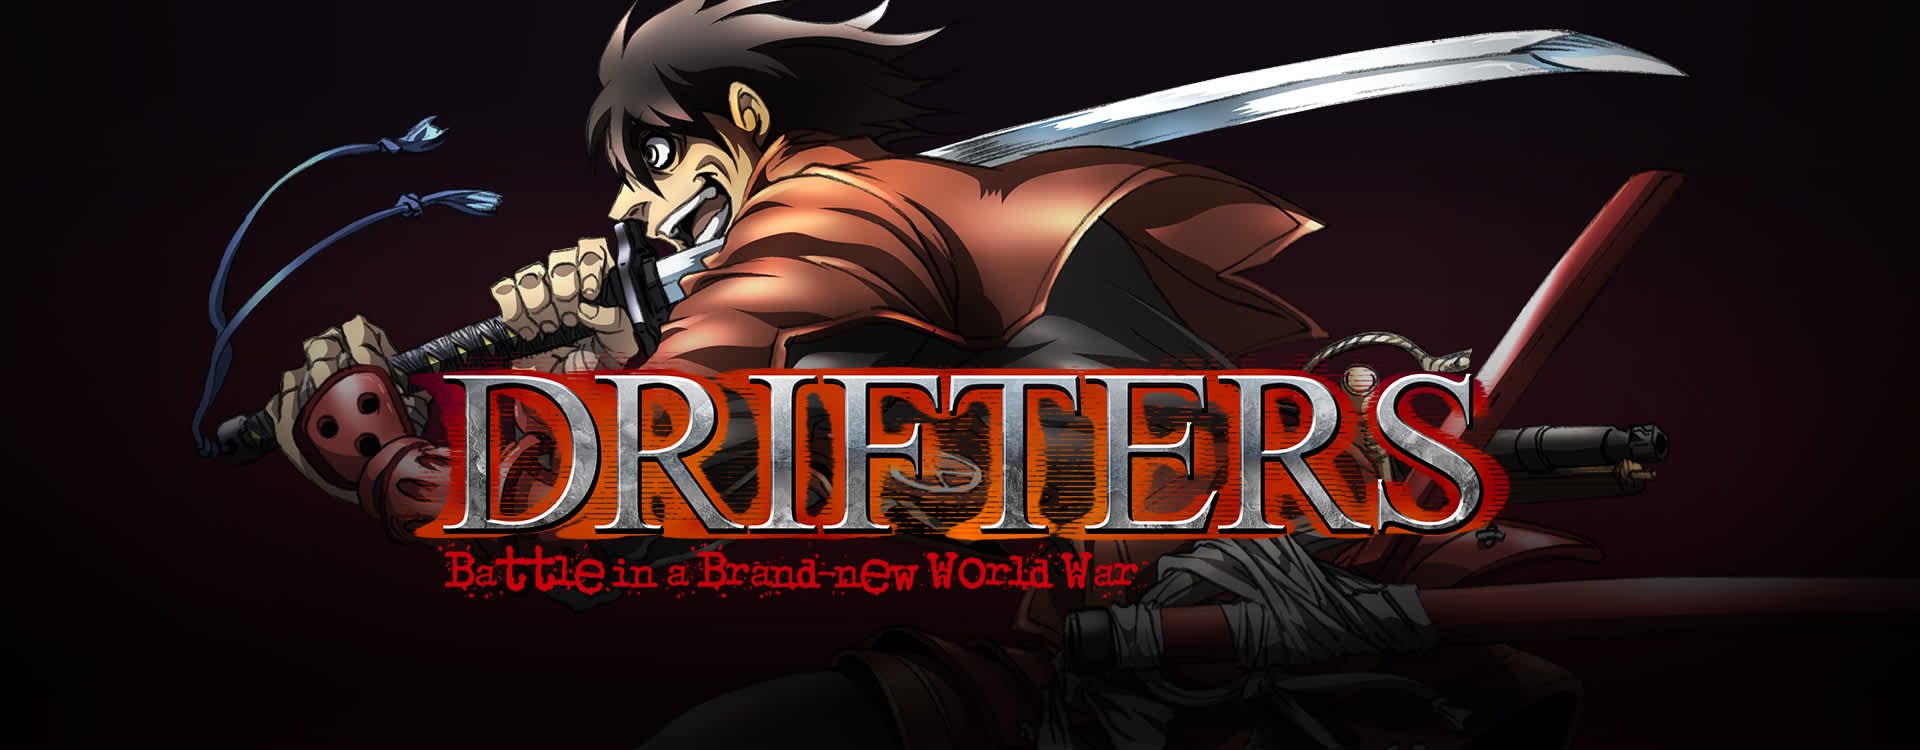 Drifters: Battle in a Brand-New World War Confirmed For Release in